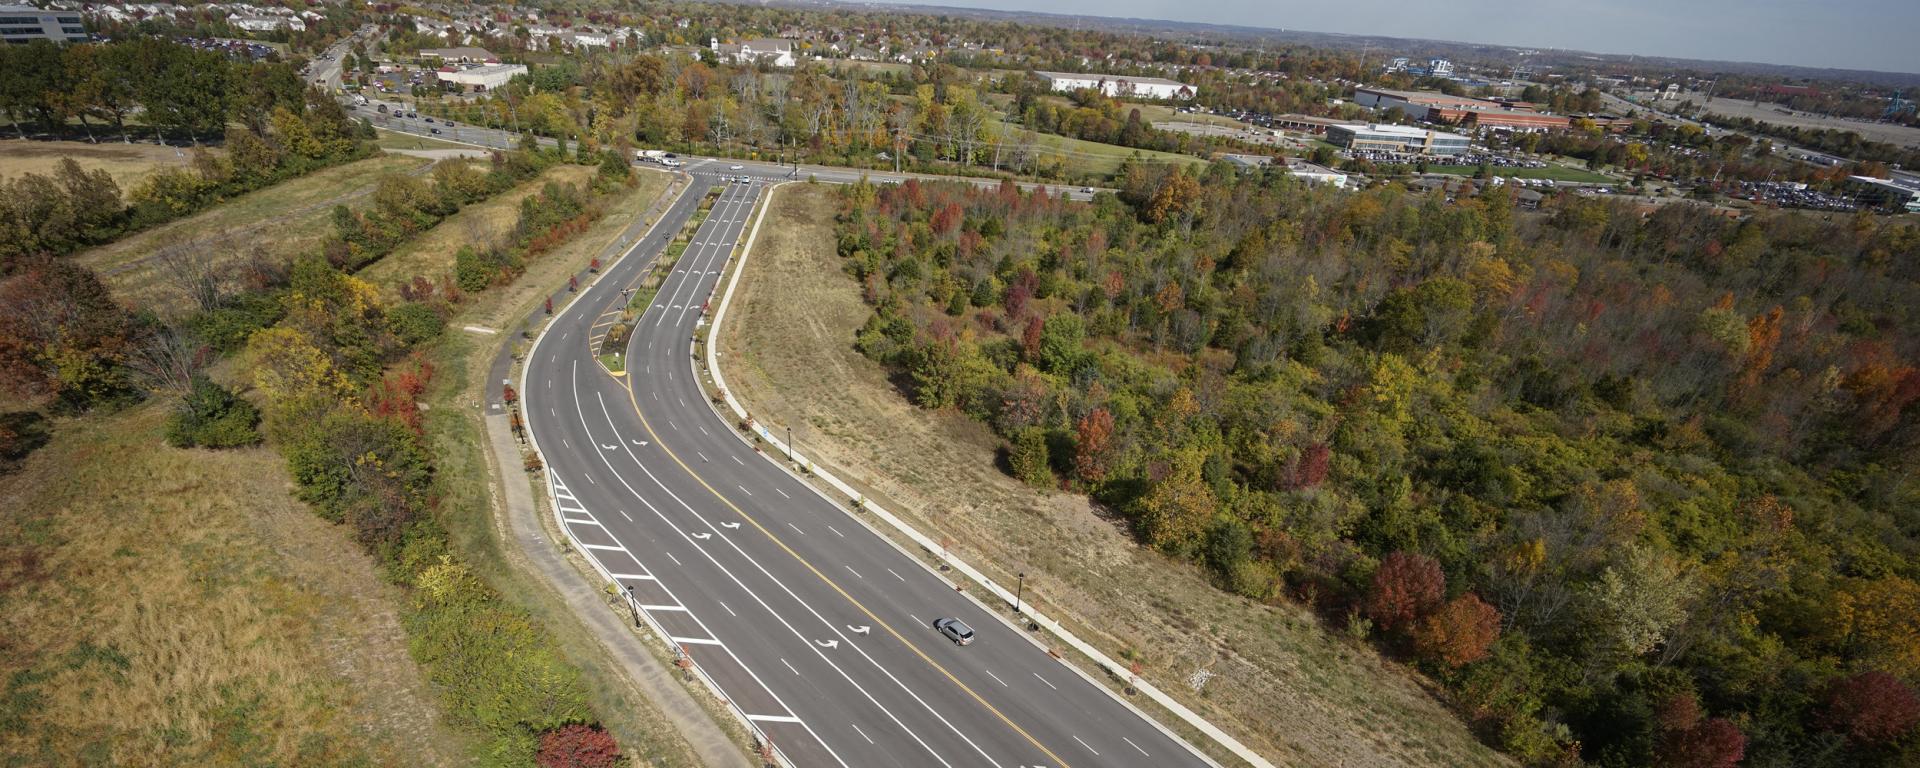 aerial photo of empty highway